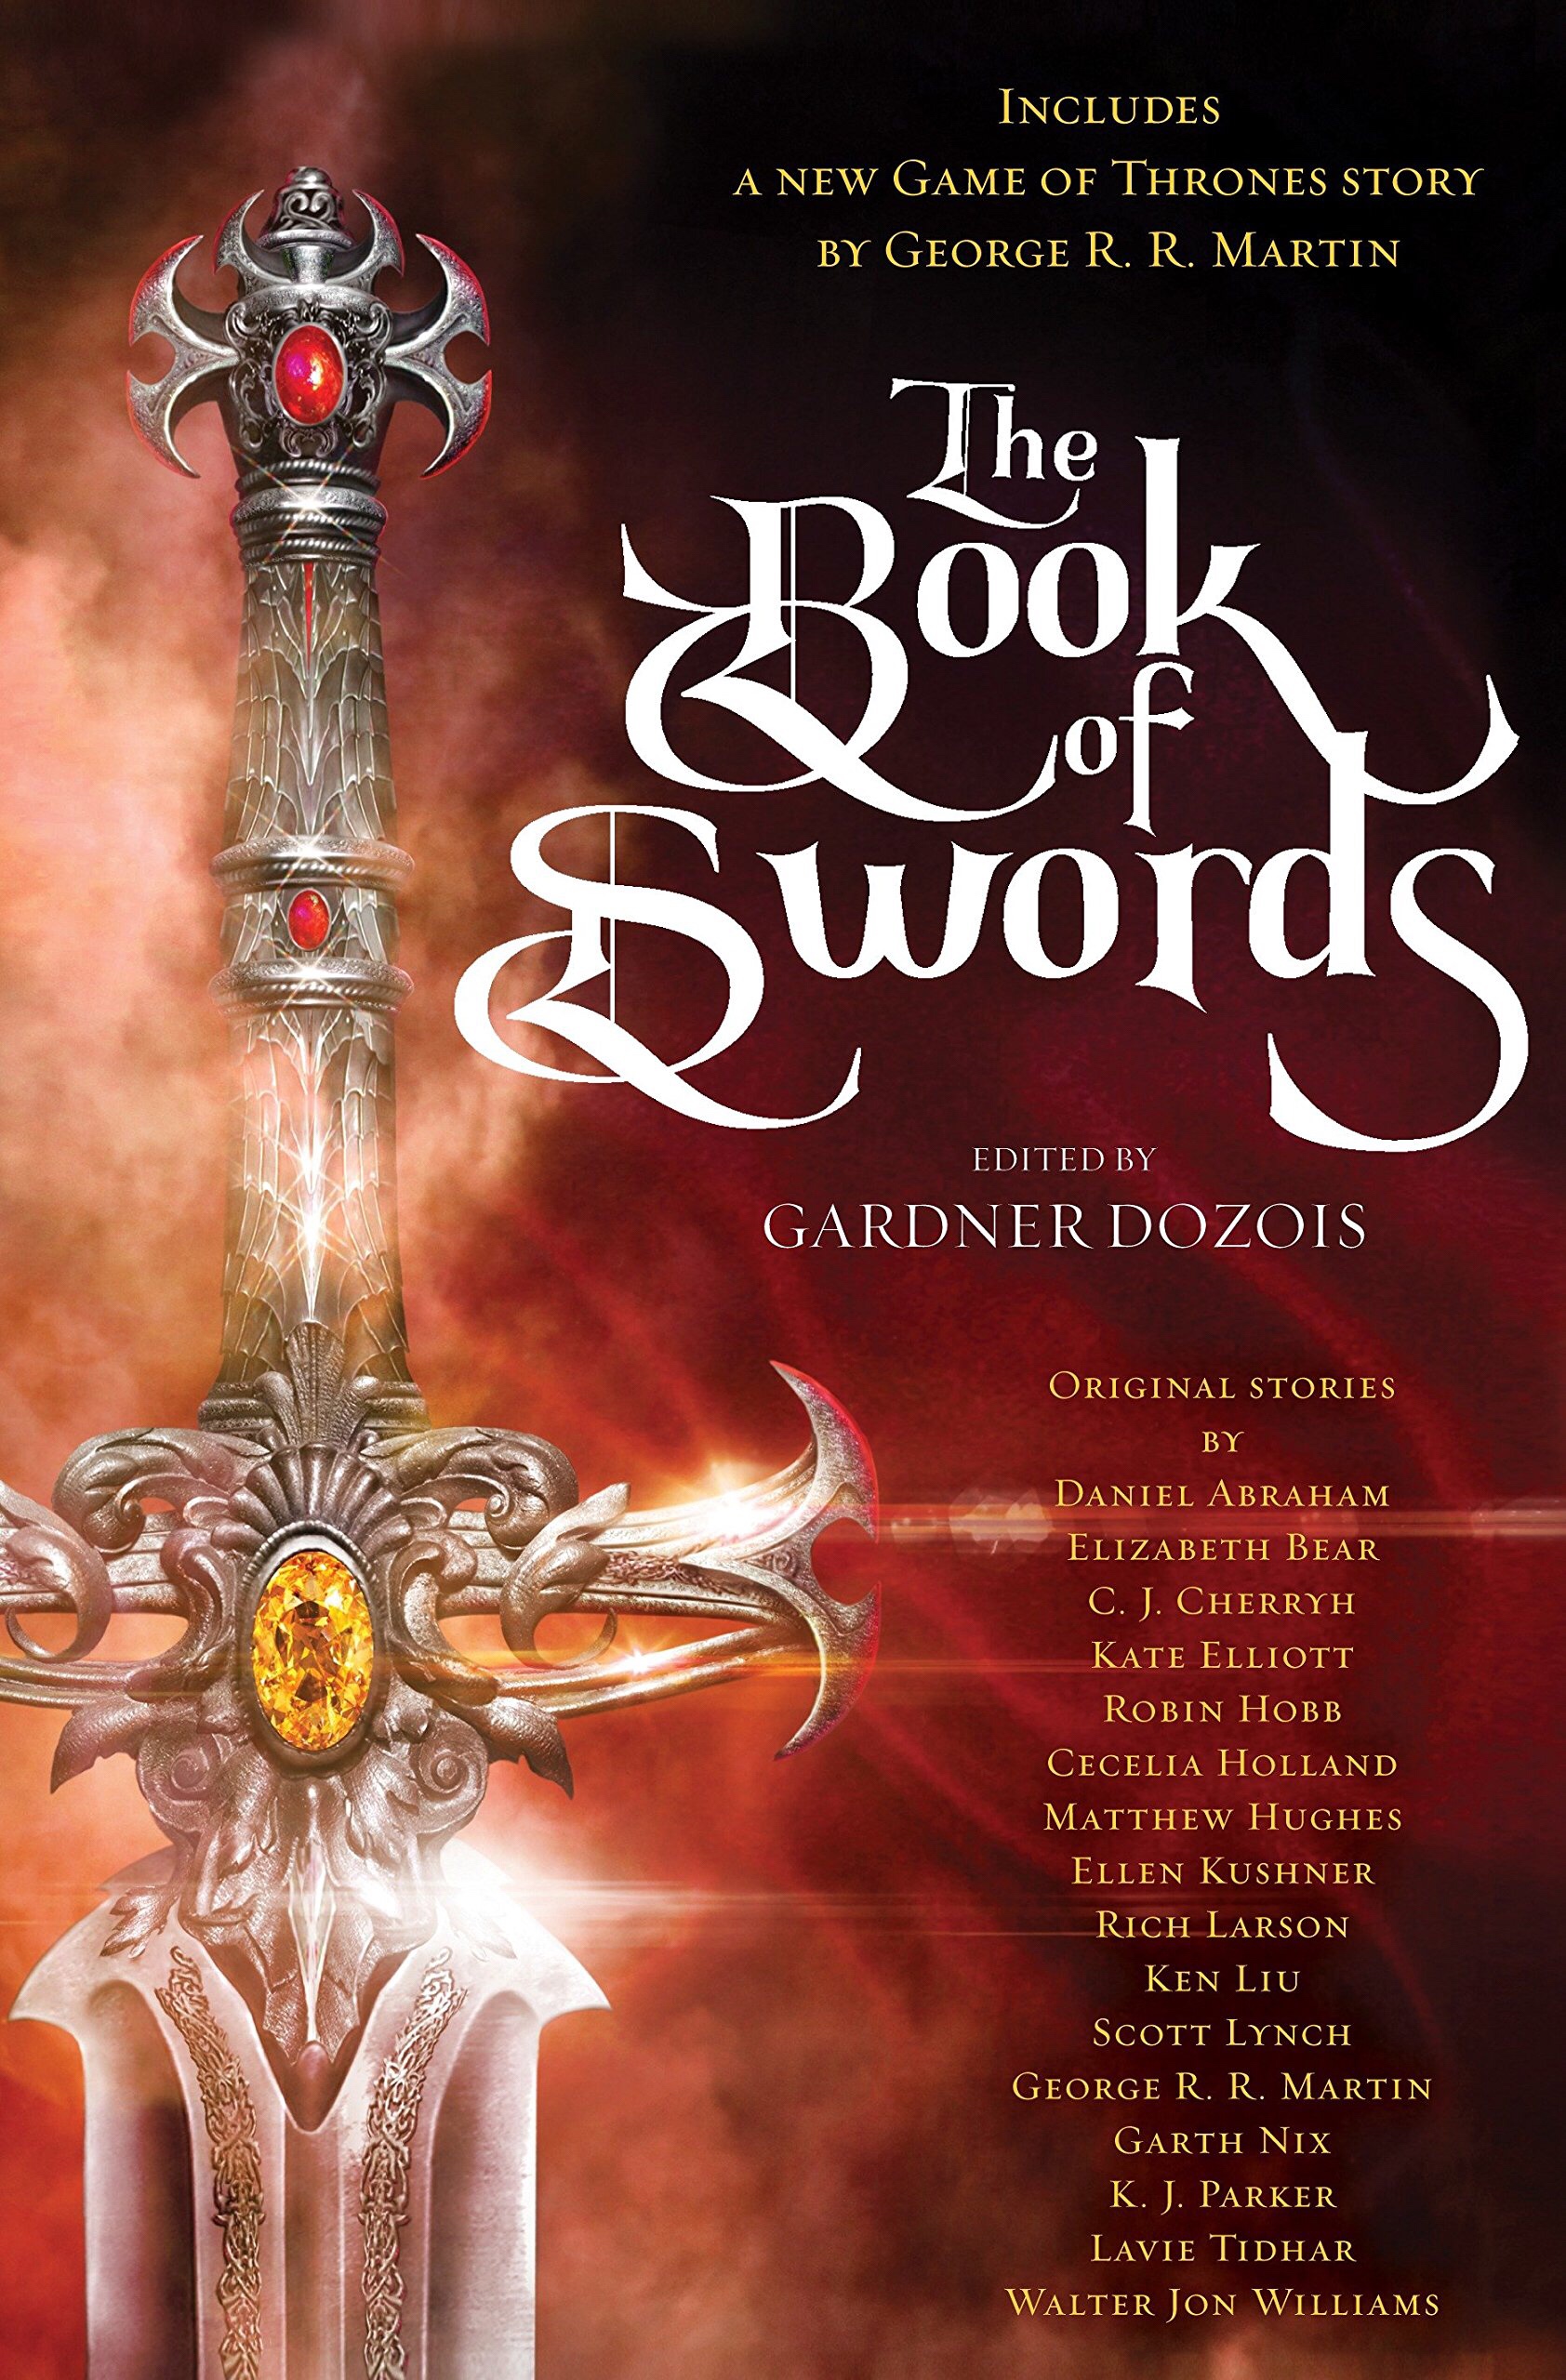 The Book of Swords, edited by Gardner Dozois